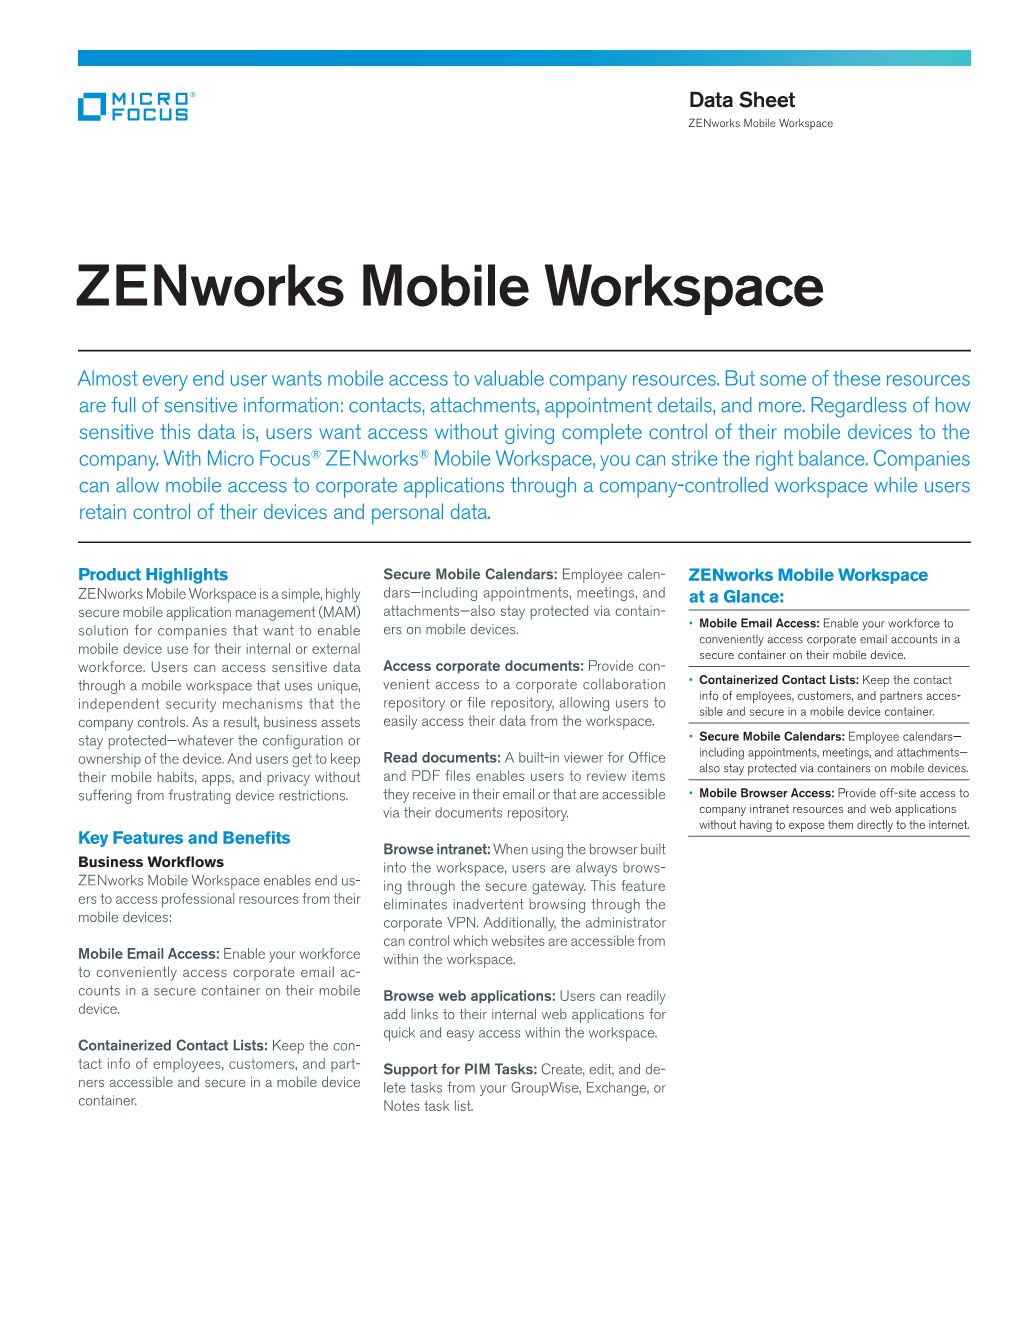 Zenworks Mobile Workspace